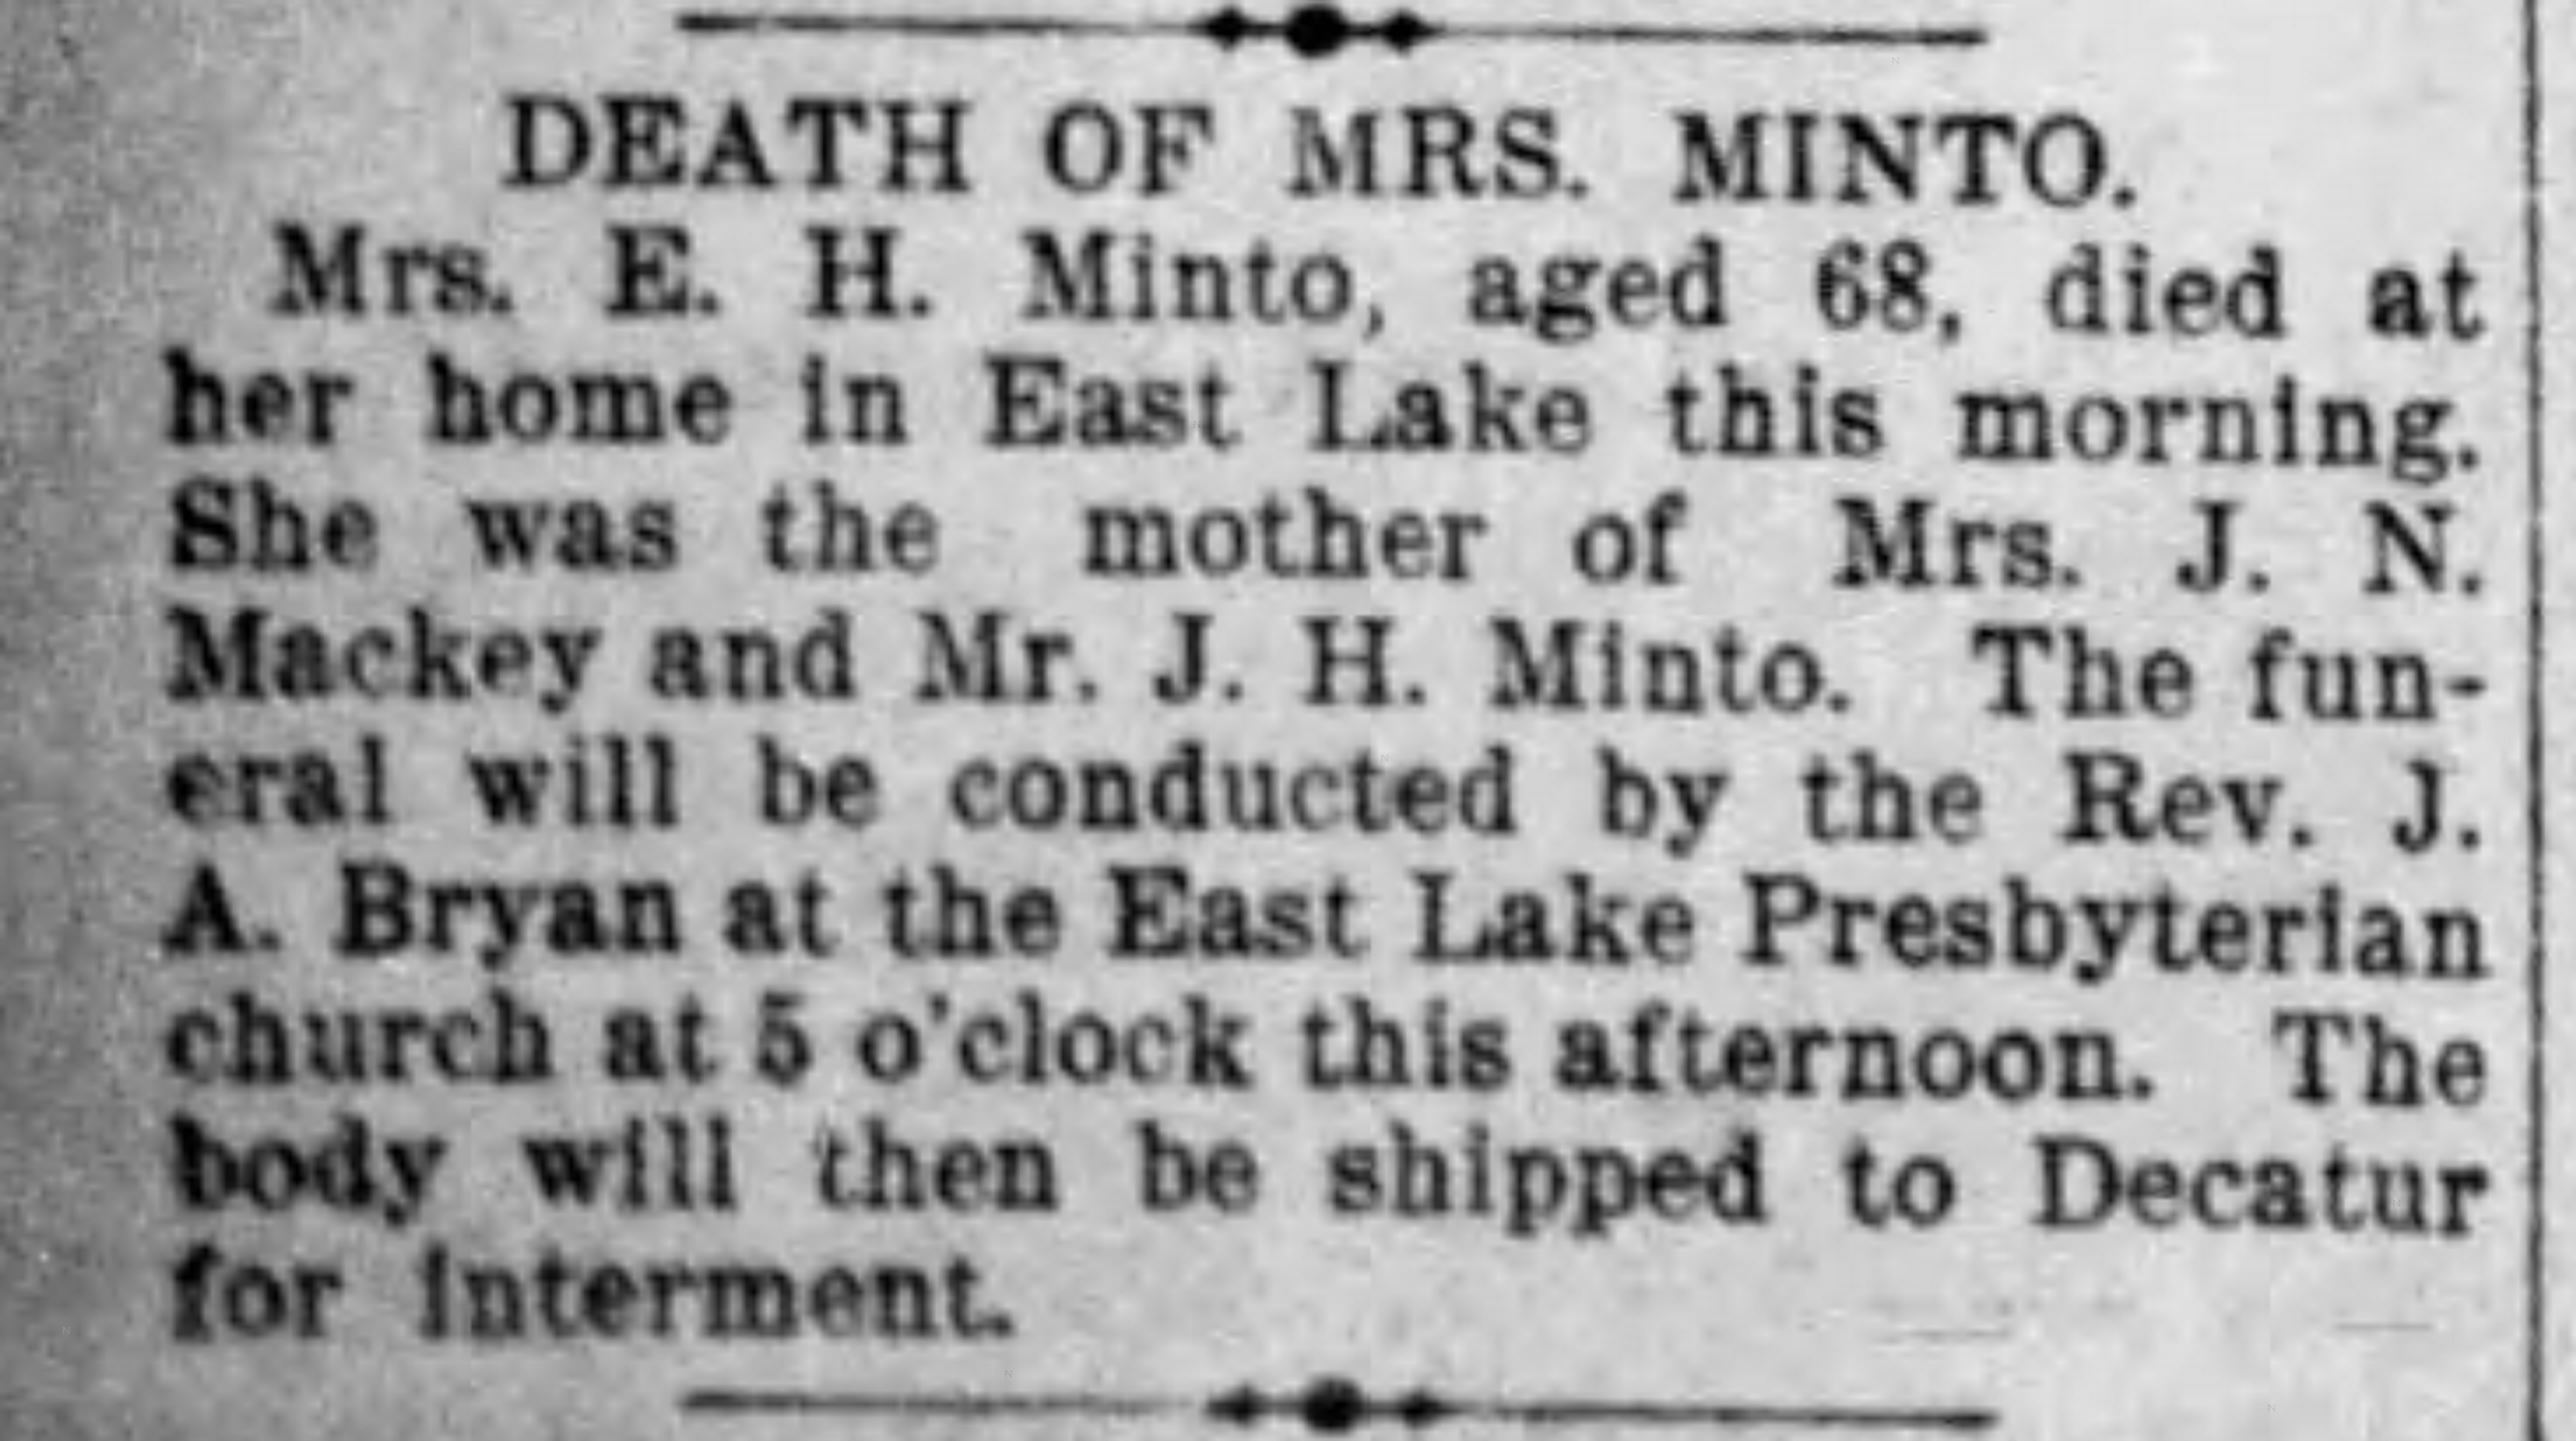 E.H. Minto obituary